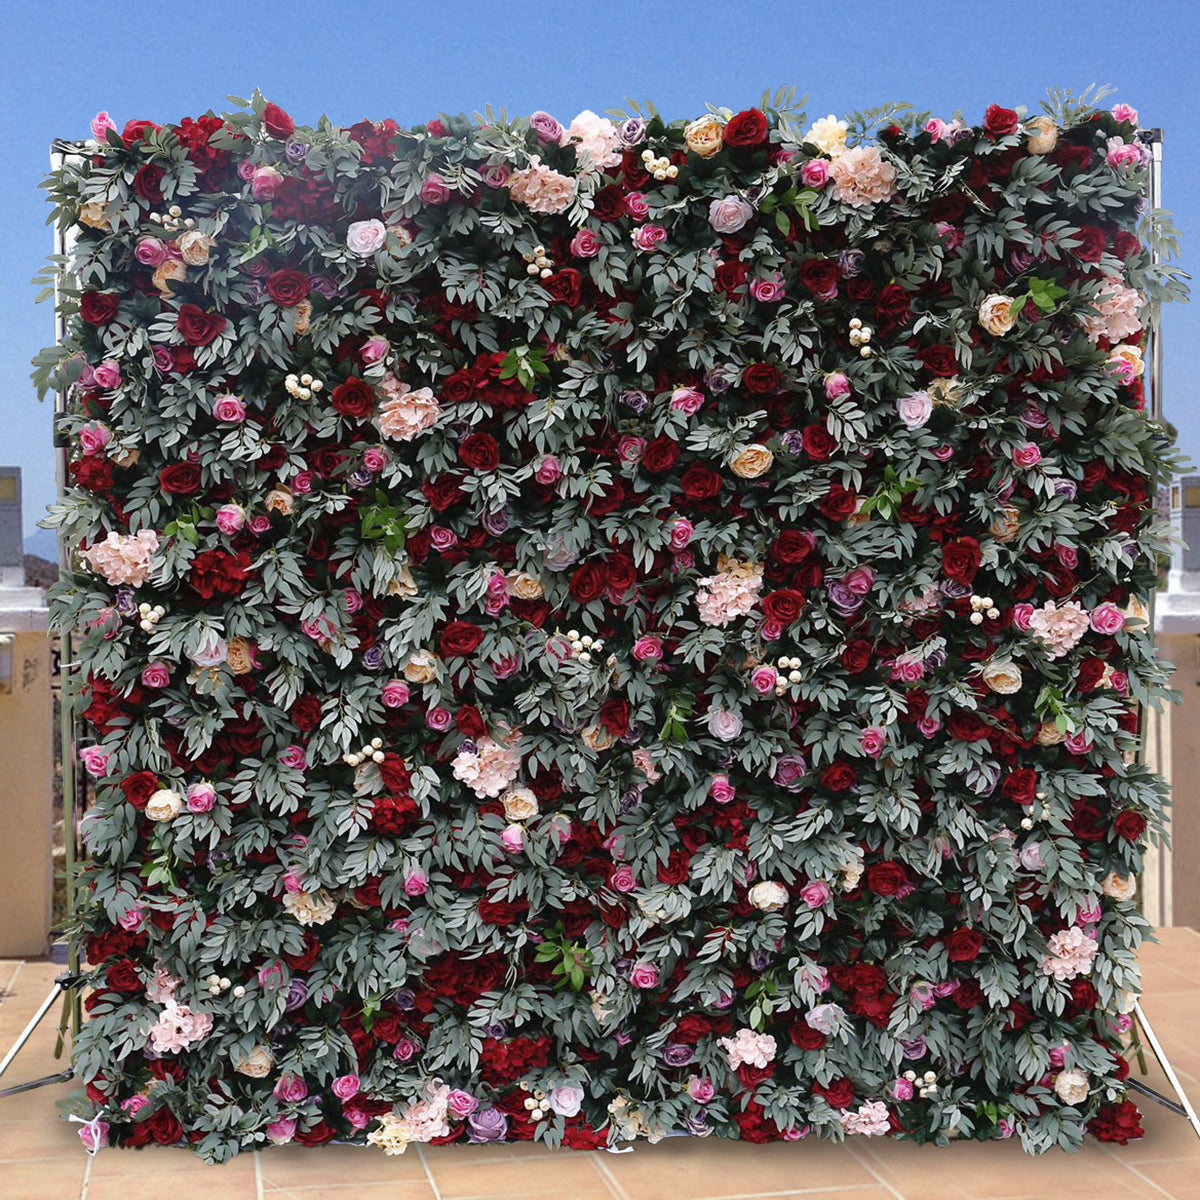 5D Artificial Flower Wall Arrangement Wedding Party Birthday Backdrop Decor HQ9028